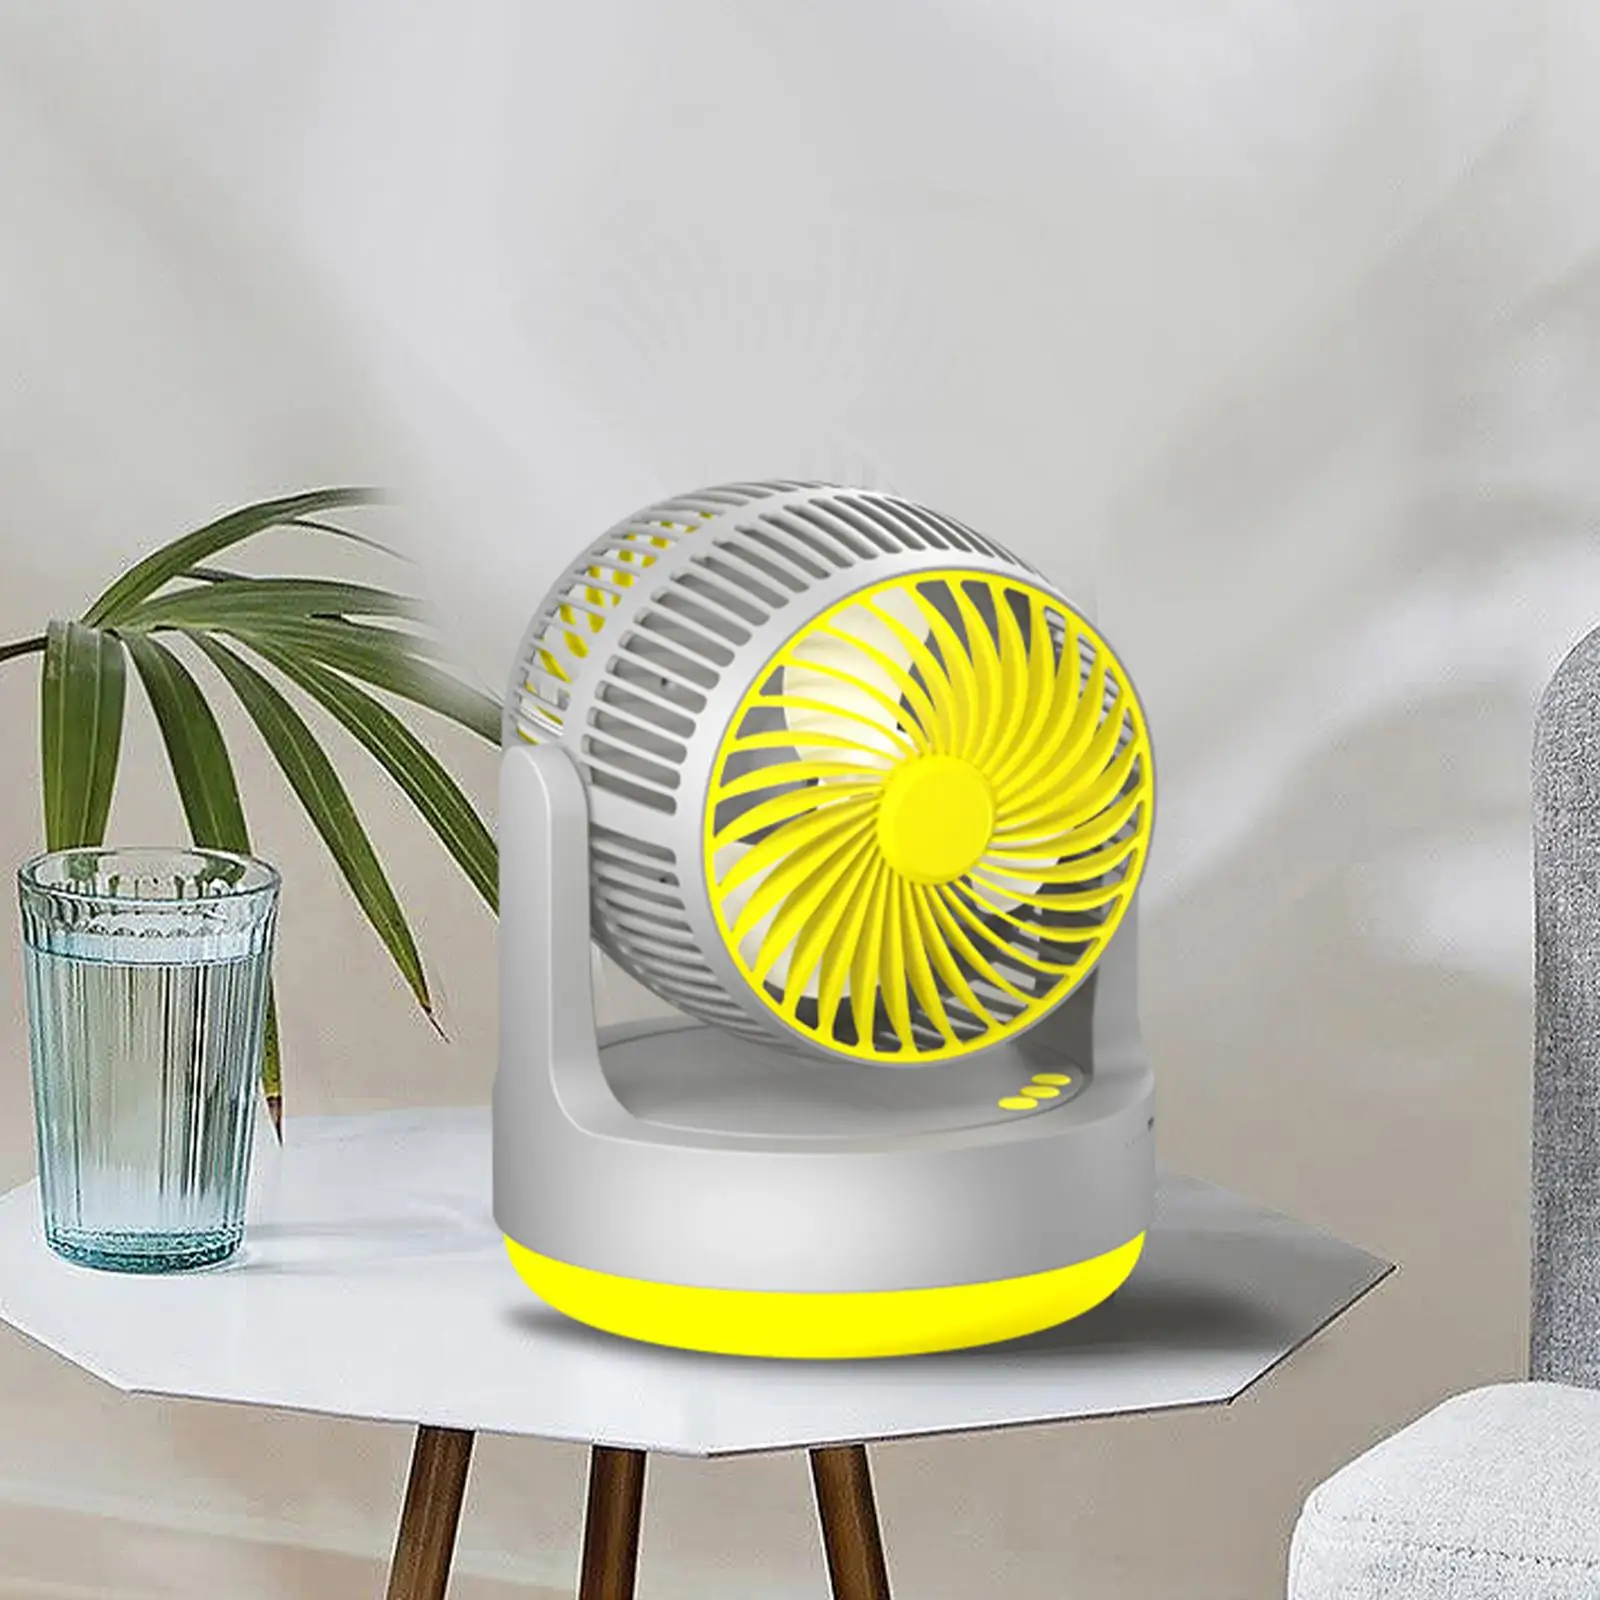 Air Circulator Fan 4 Speeds Adjustable 360 Degree Rotation Desk Cooling Fan for Office